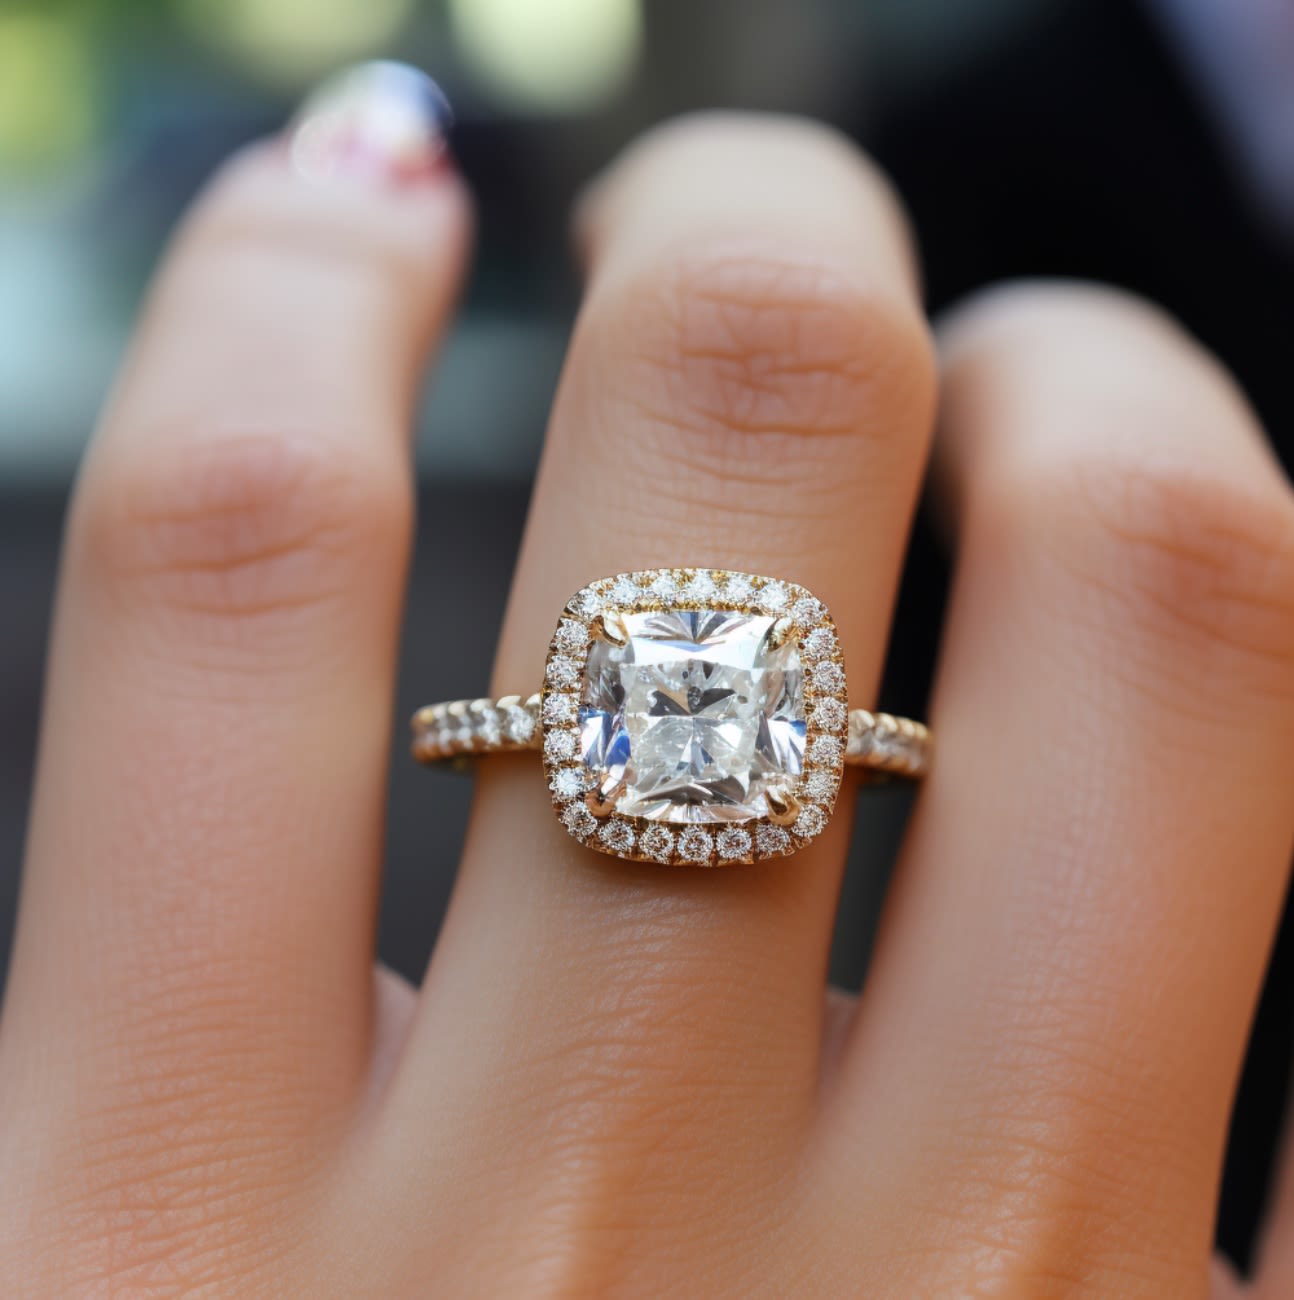 5 carat diamond ring on finger